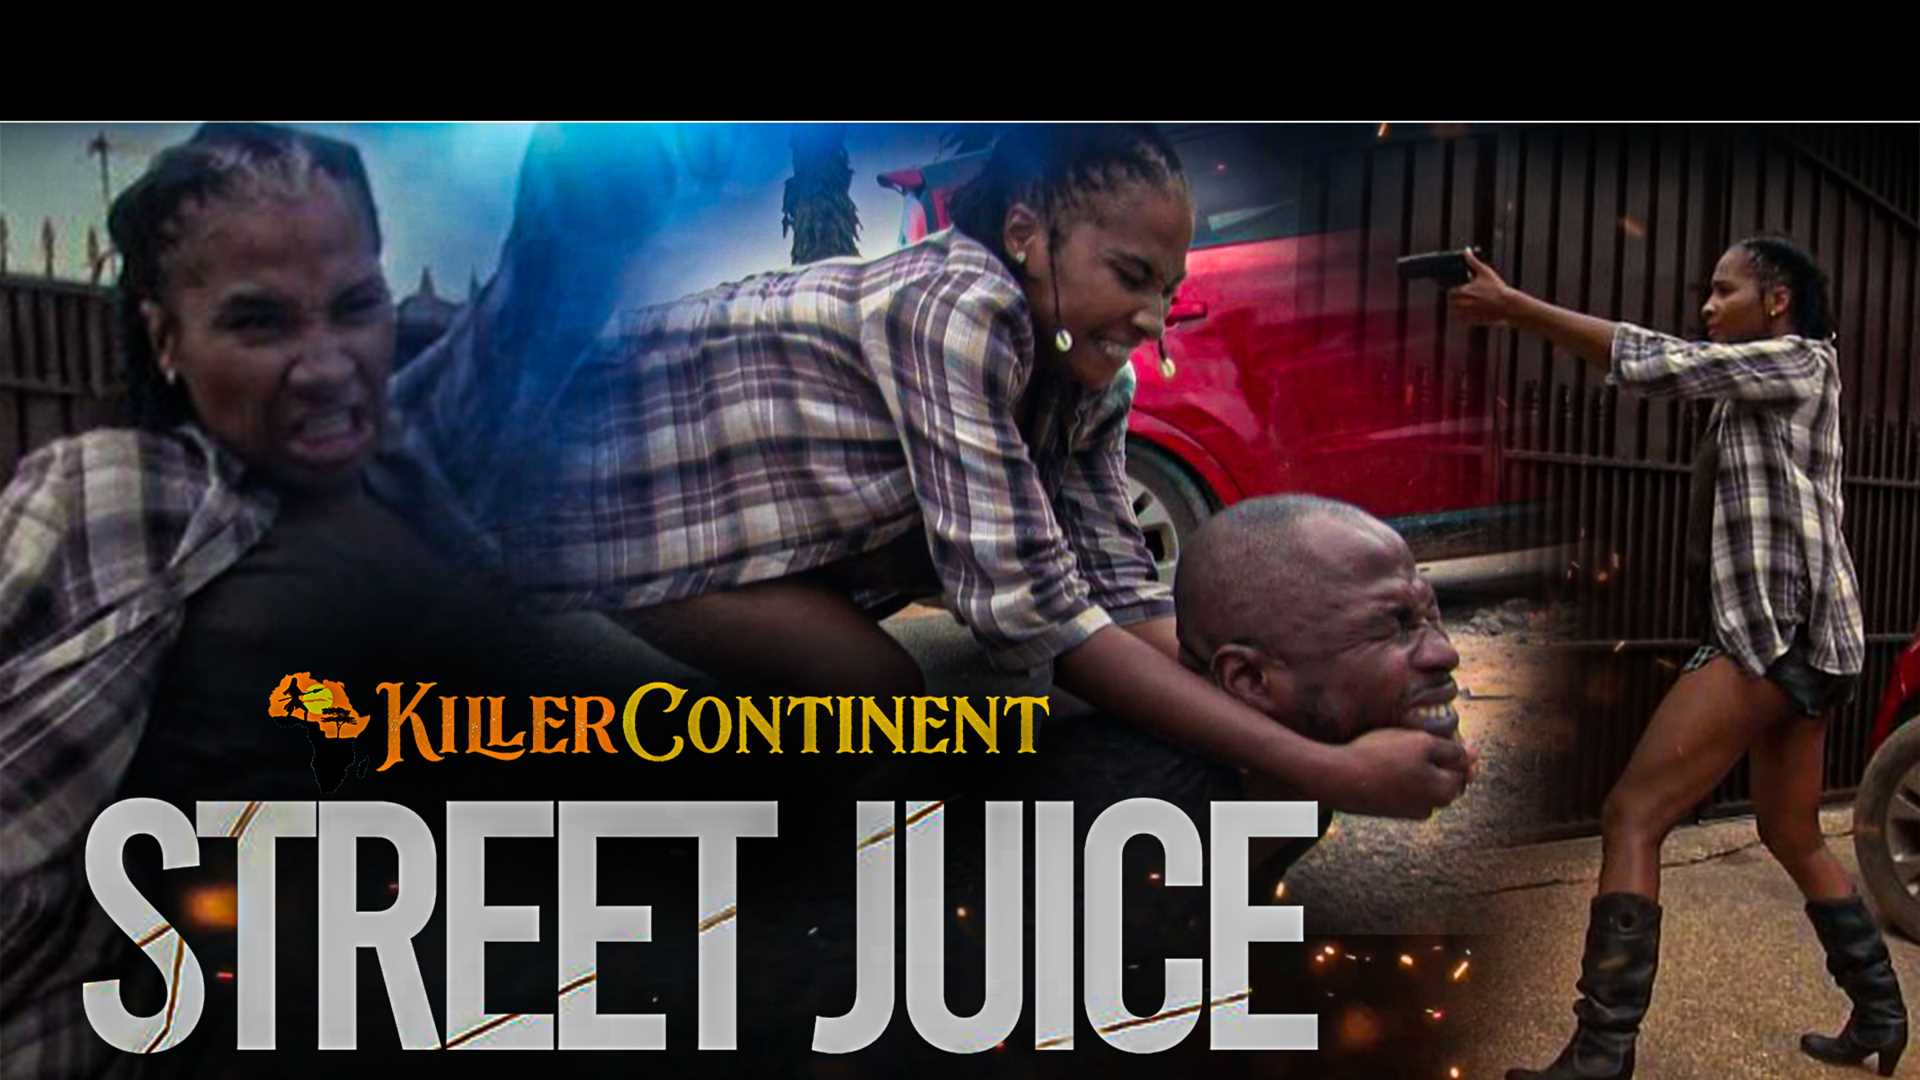 #7 - Street Juice